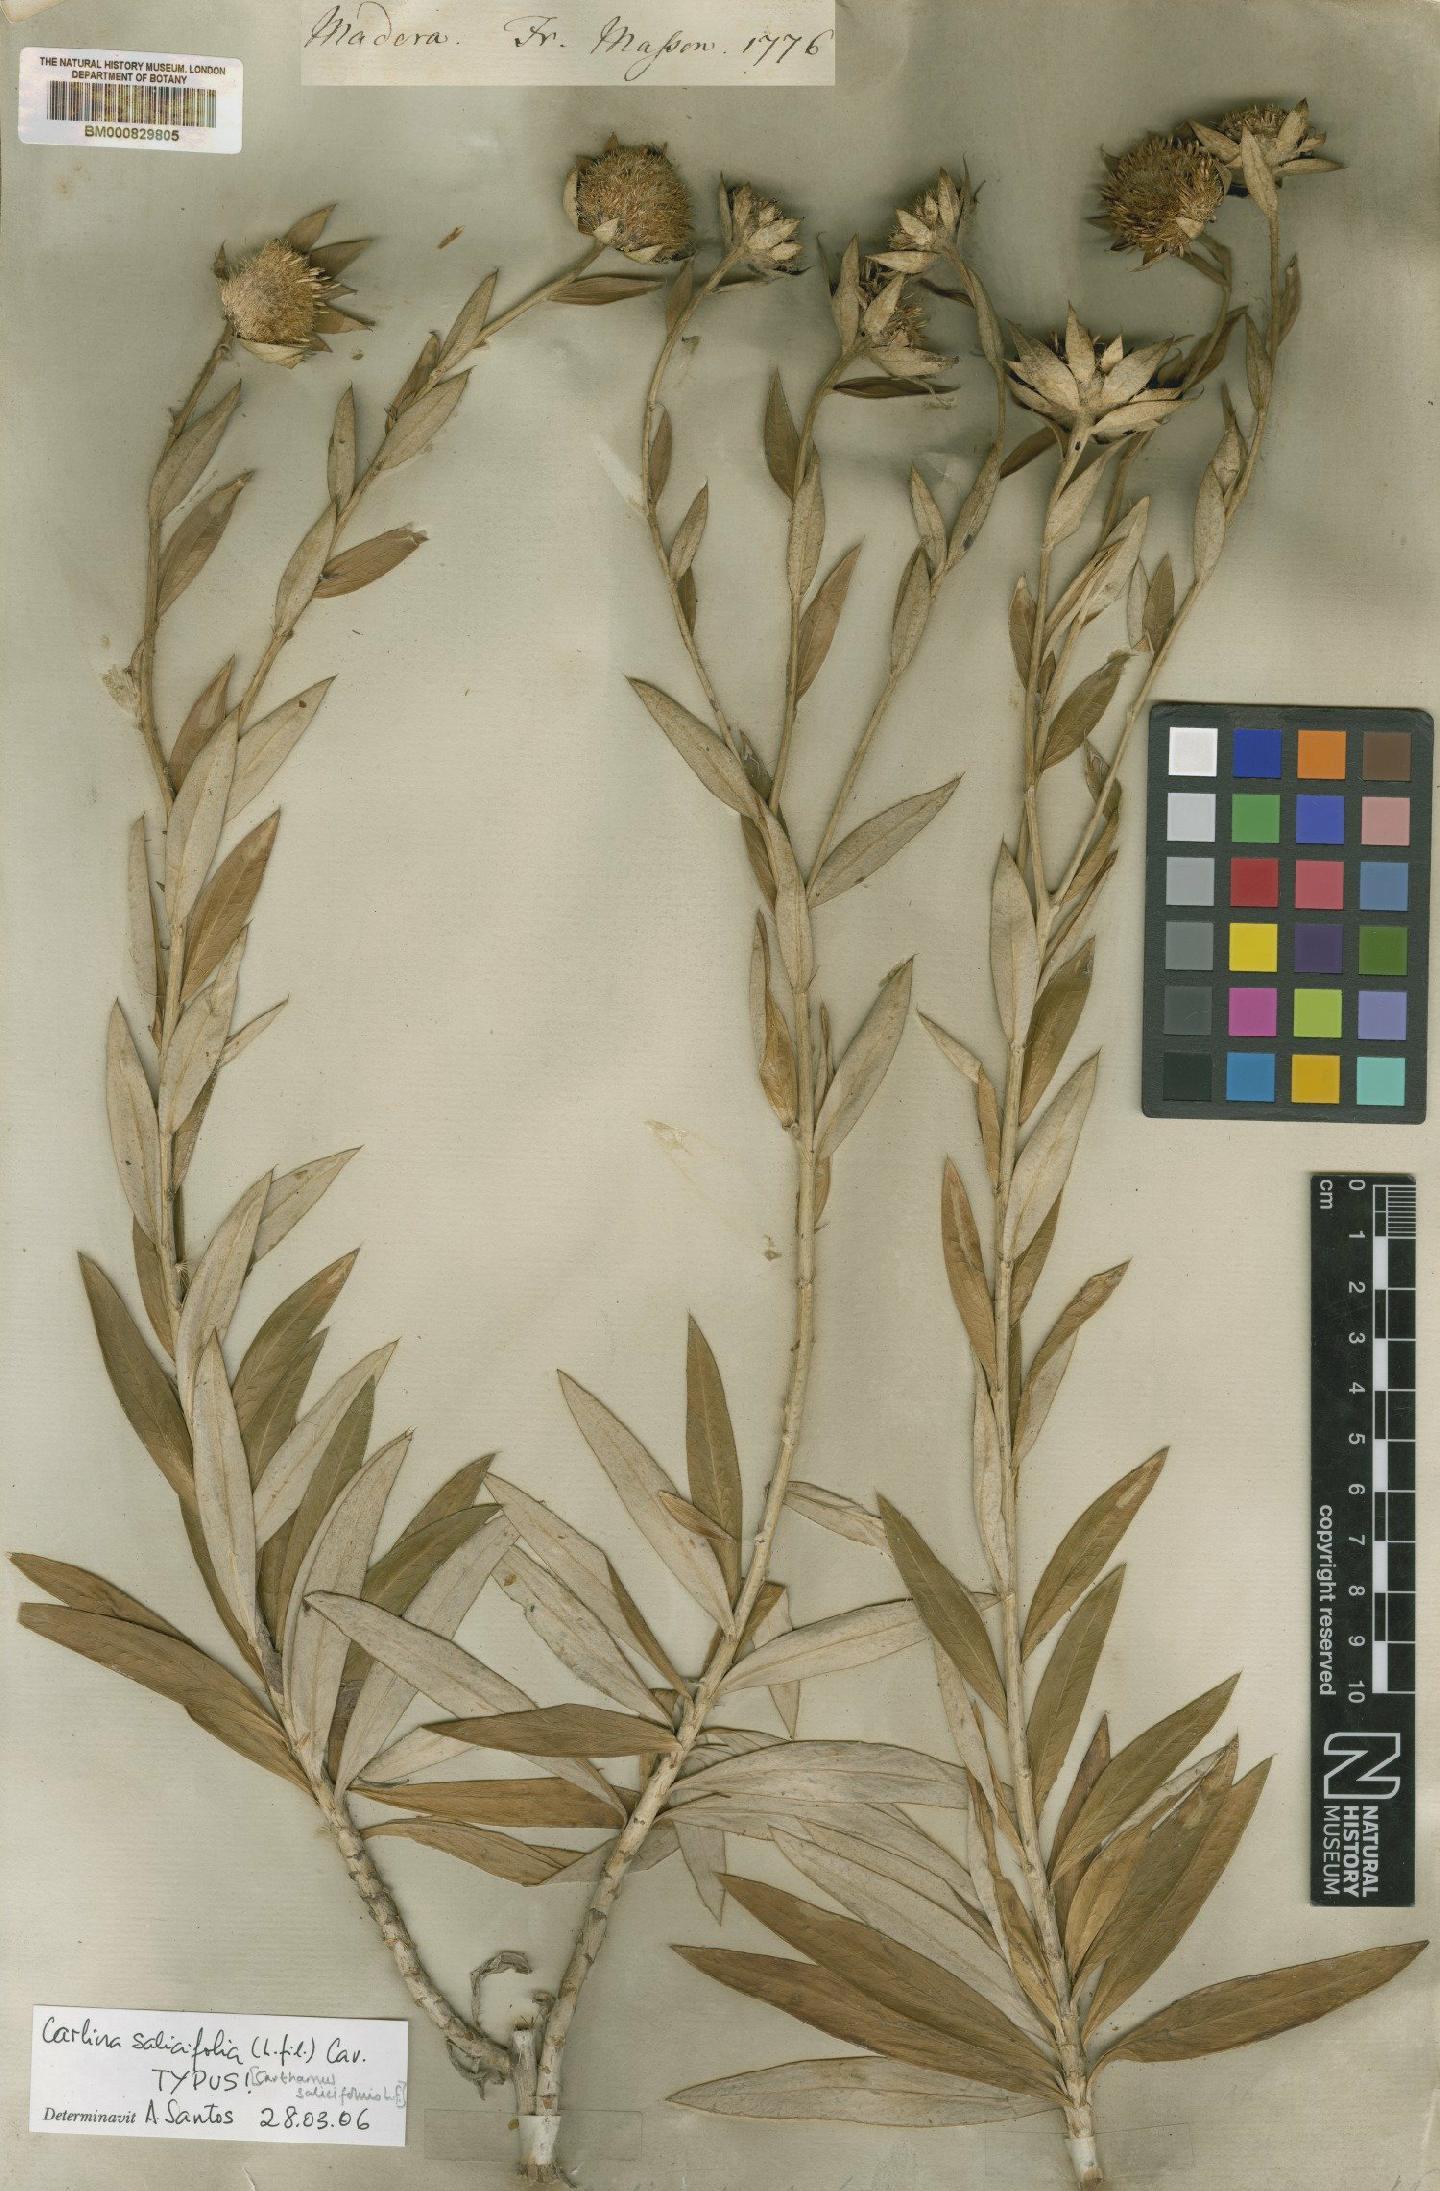 To NHMUK collection (Carlina salicifolia (L.f.) Cav.; NHMUK:ecatalogue:4601064)